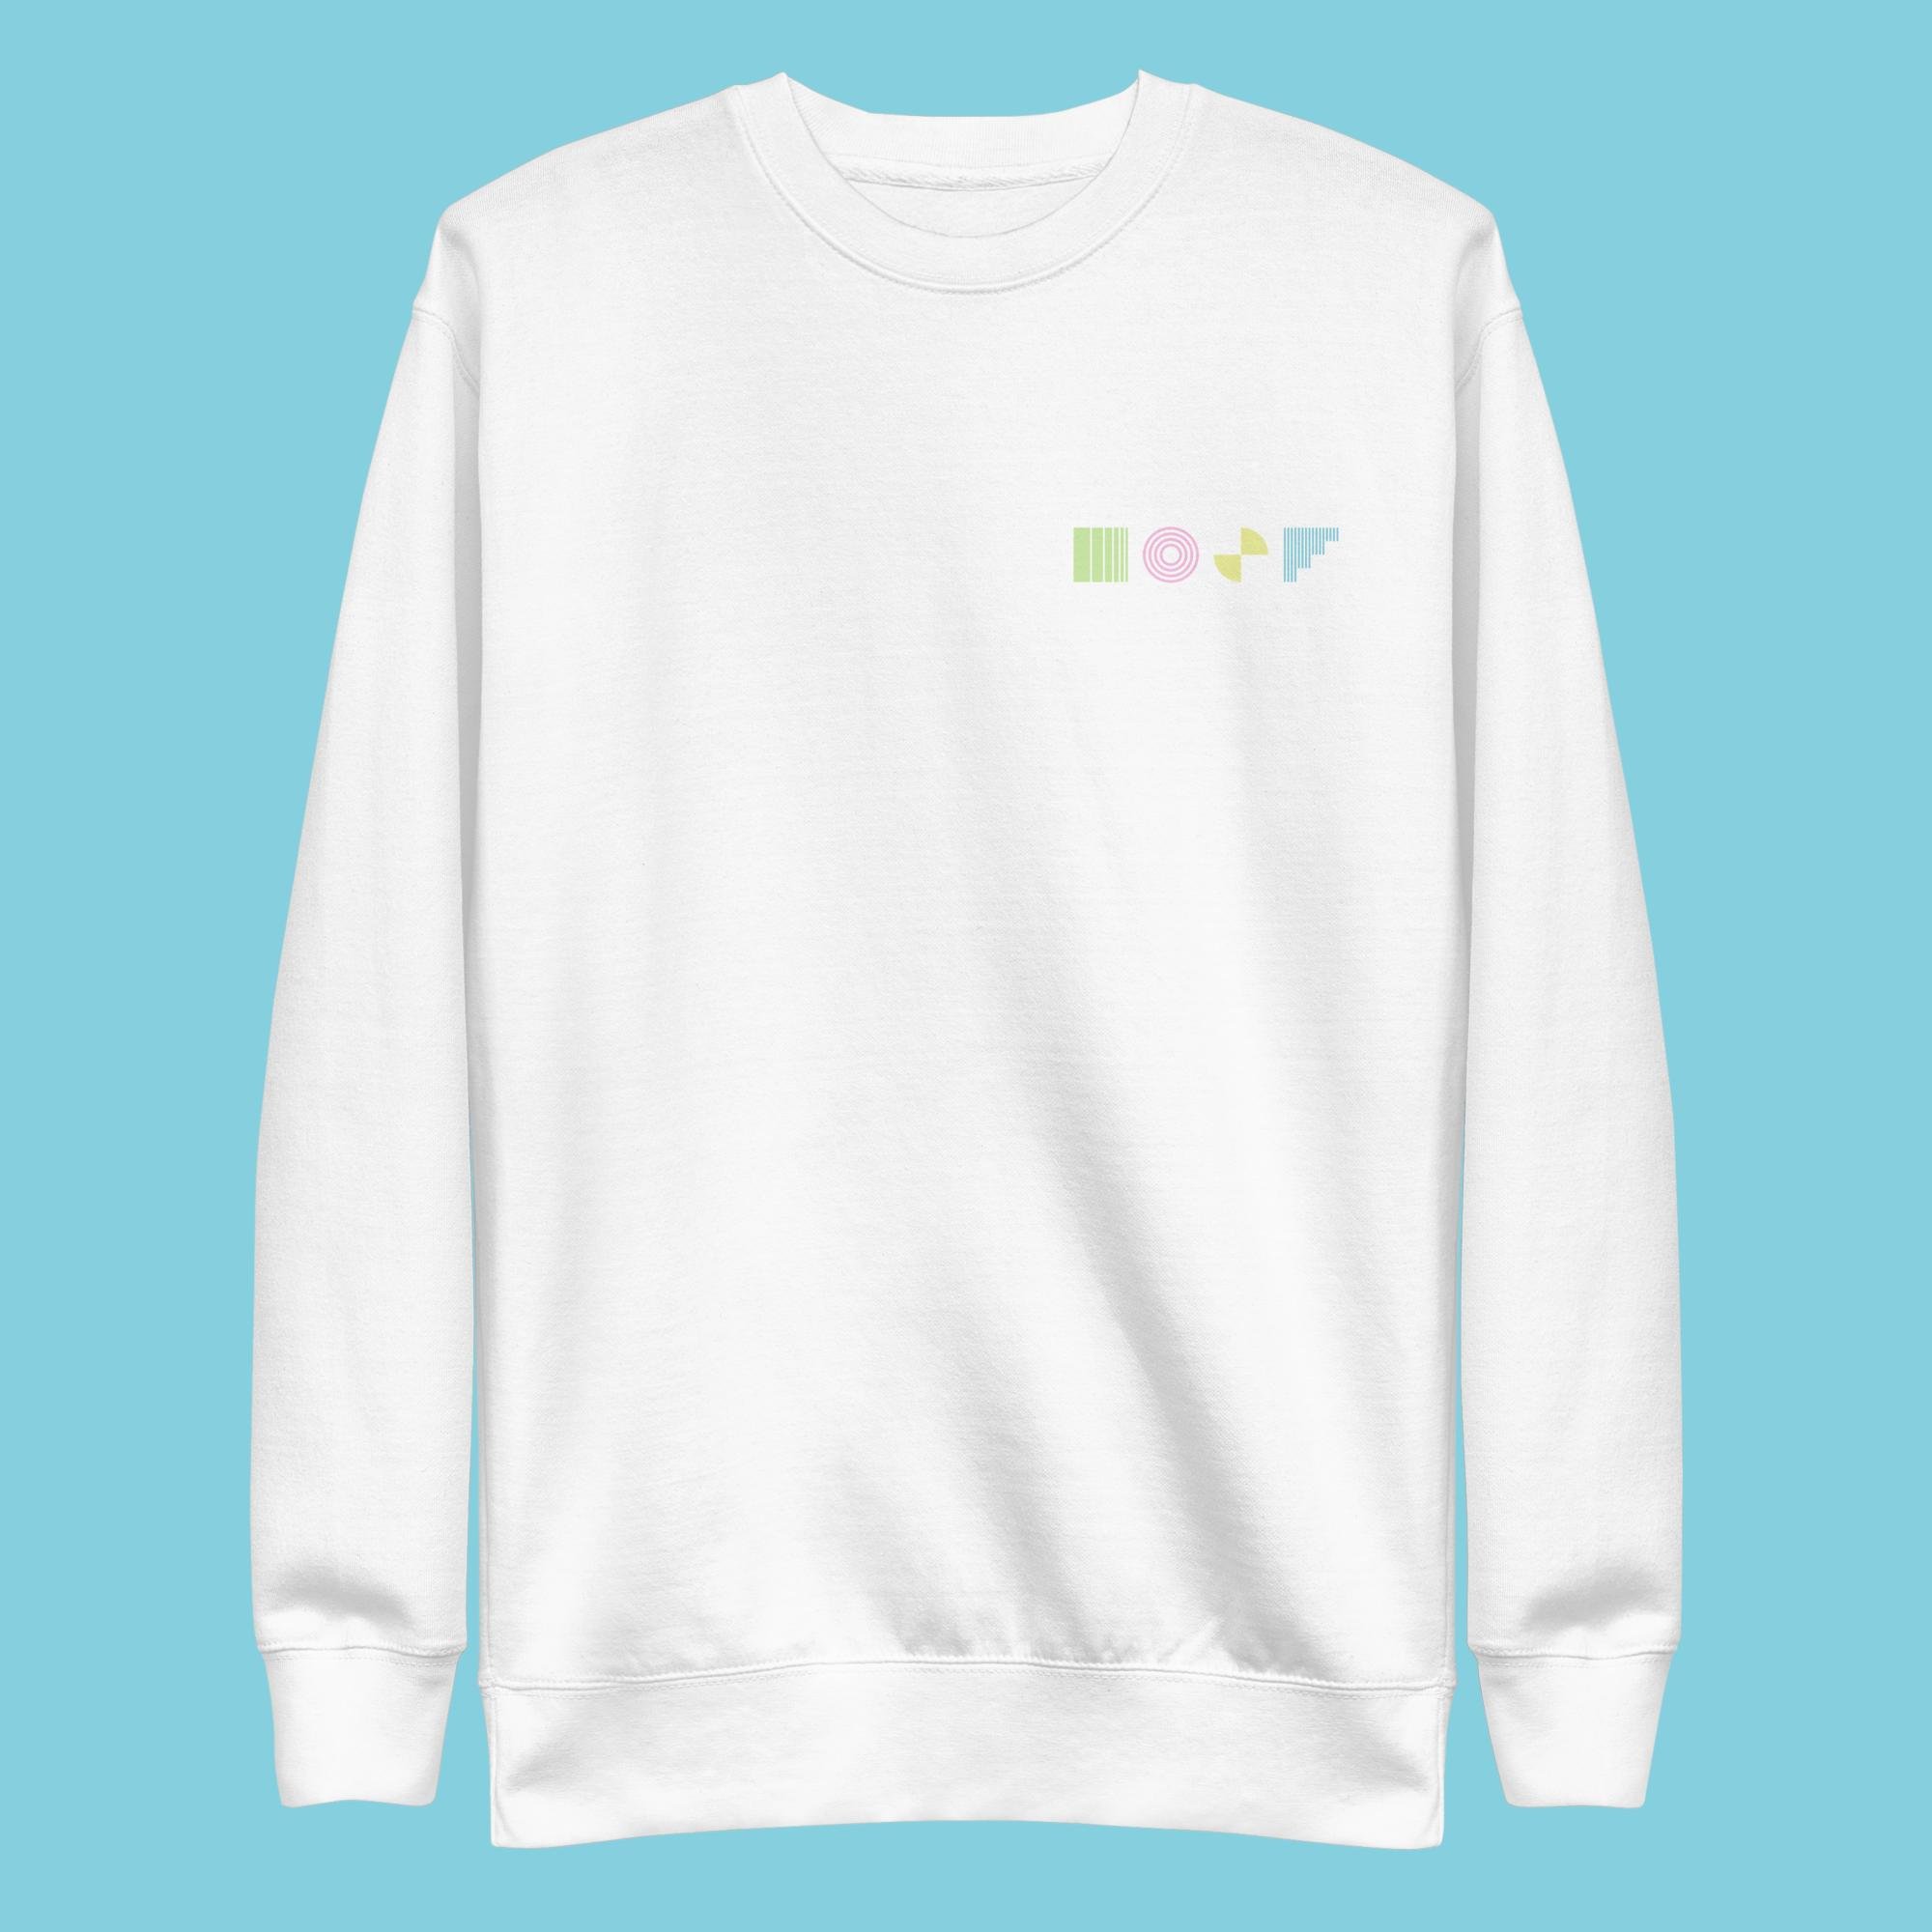 unisex-premium-sweatshirt-white-front-6582f59c51bf6.jpg